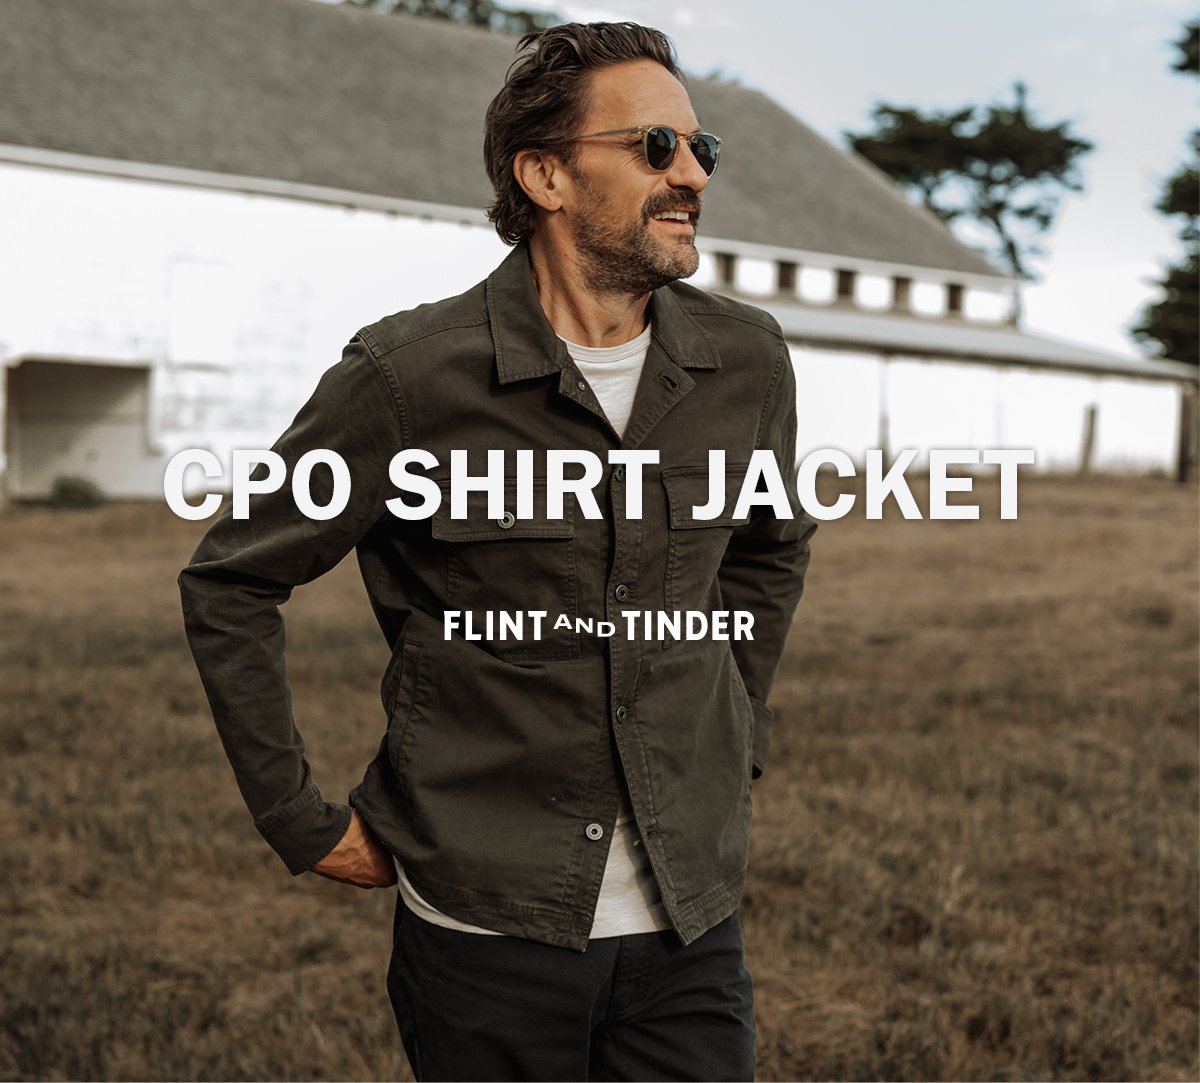 Huckberry: Naval Shirt Jacket Redesign | Milled